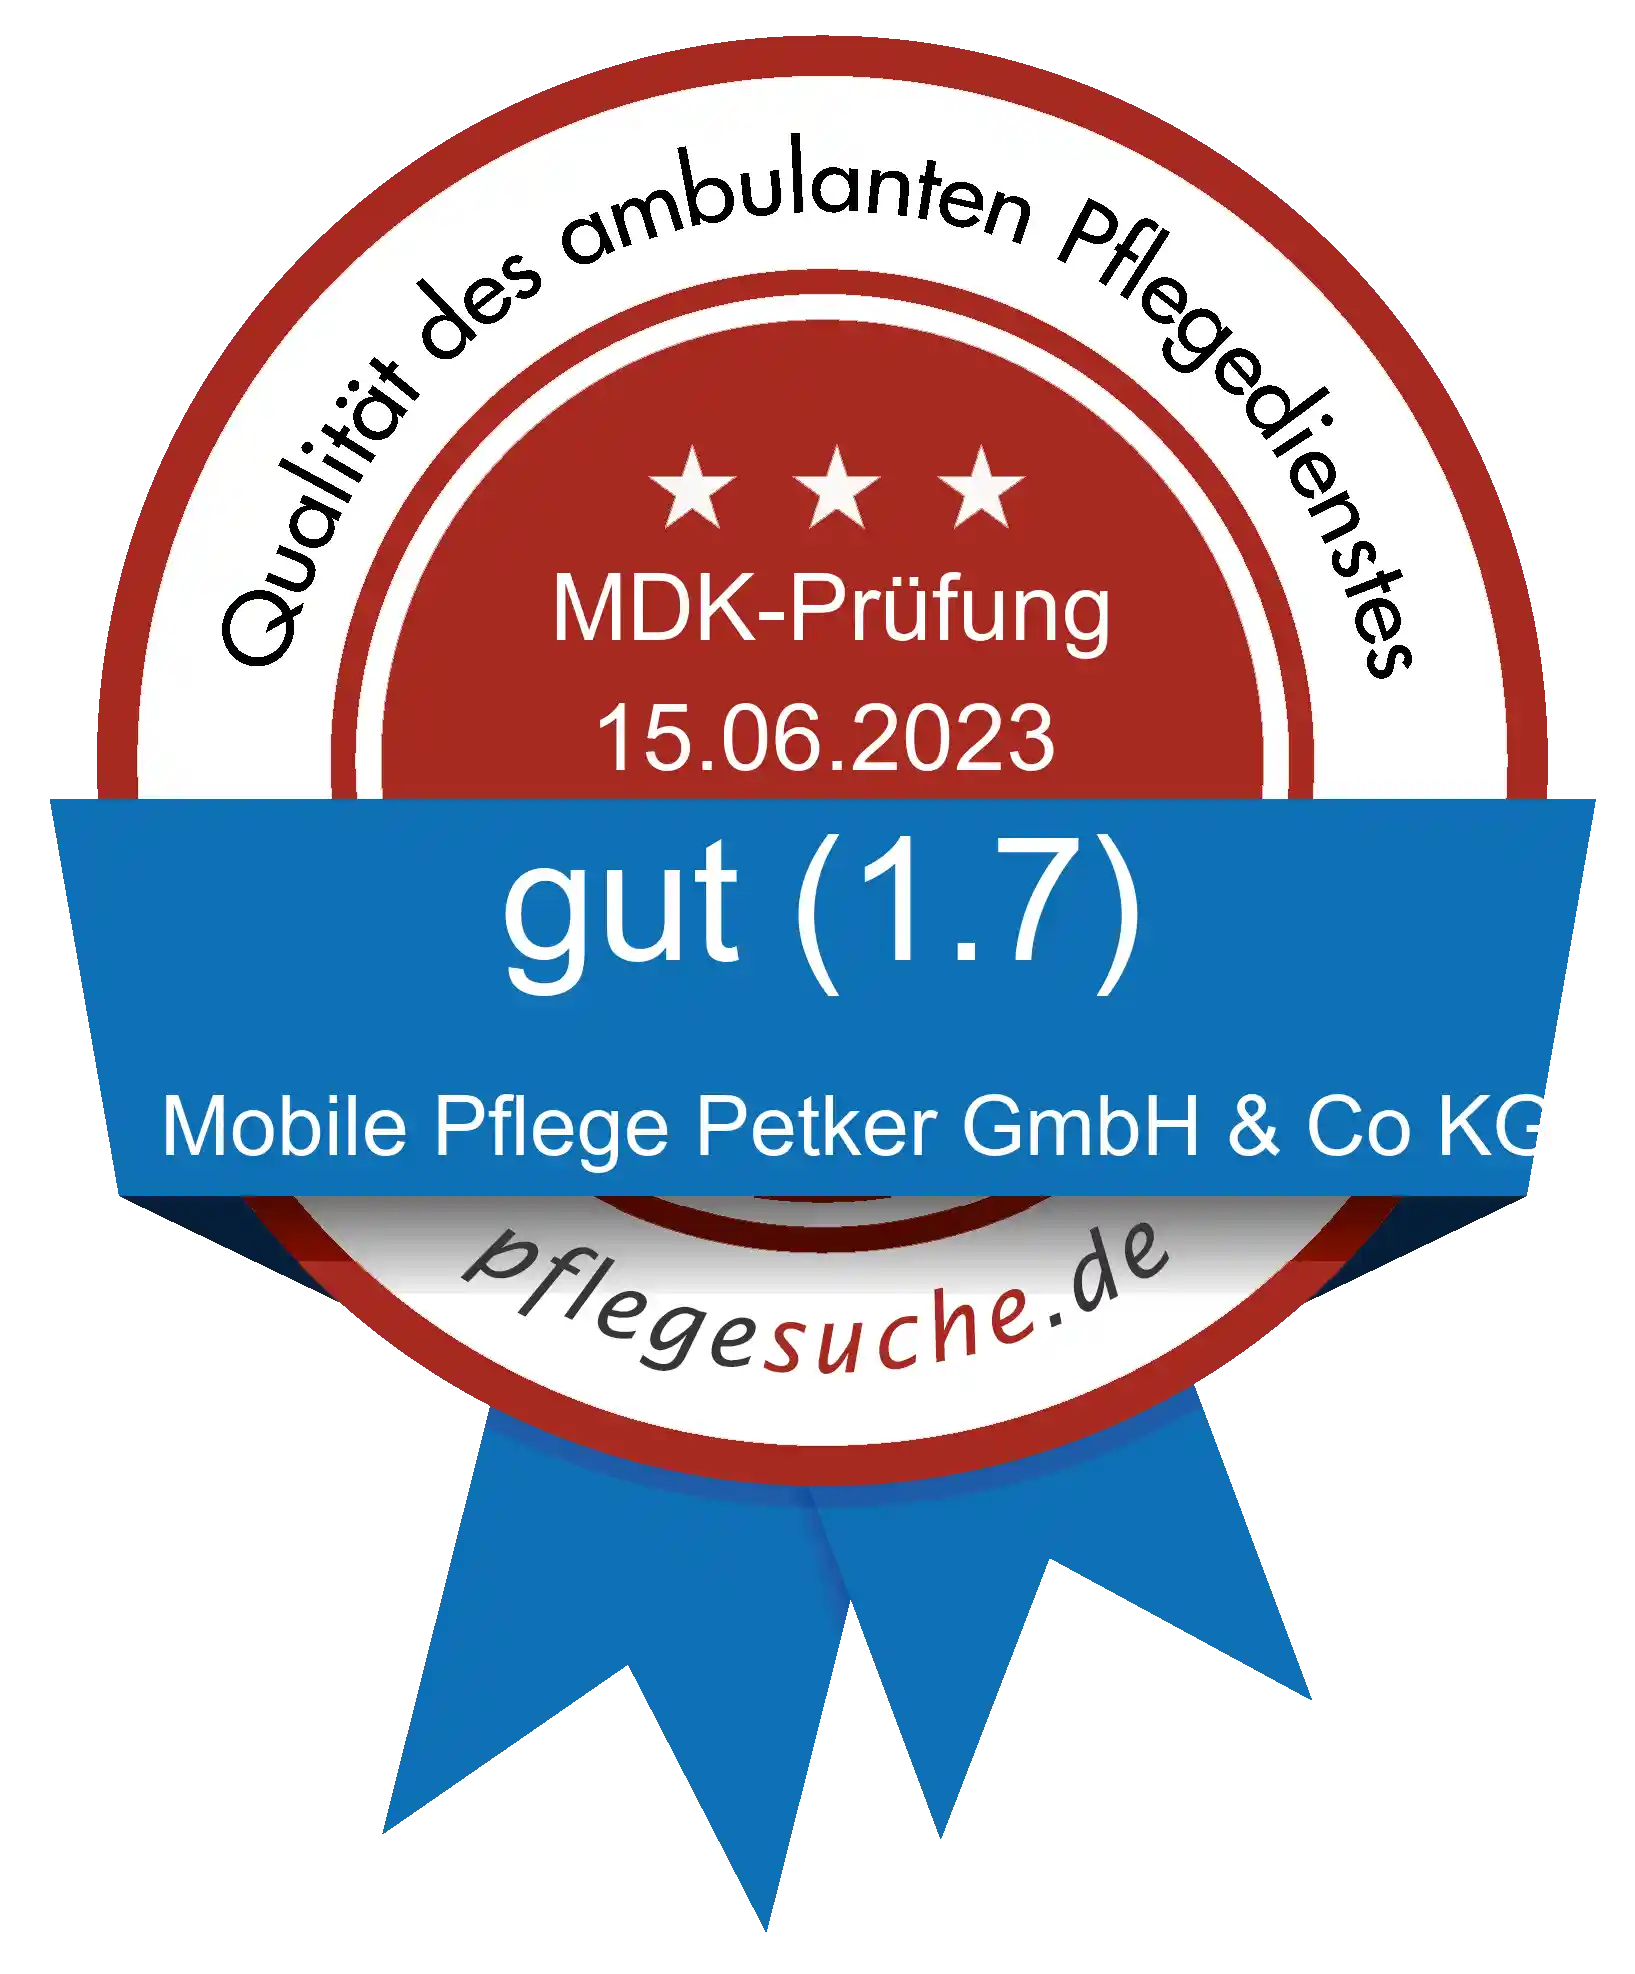 Siegel Benotung: Mobile Pflege Petker GmbH & Co KG